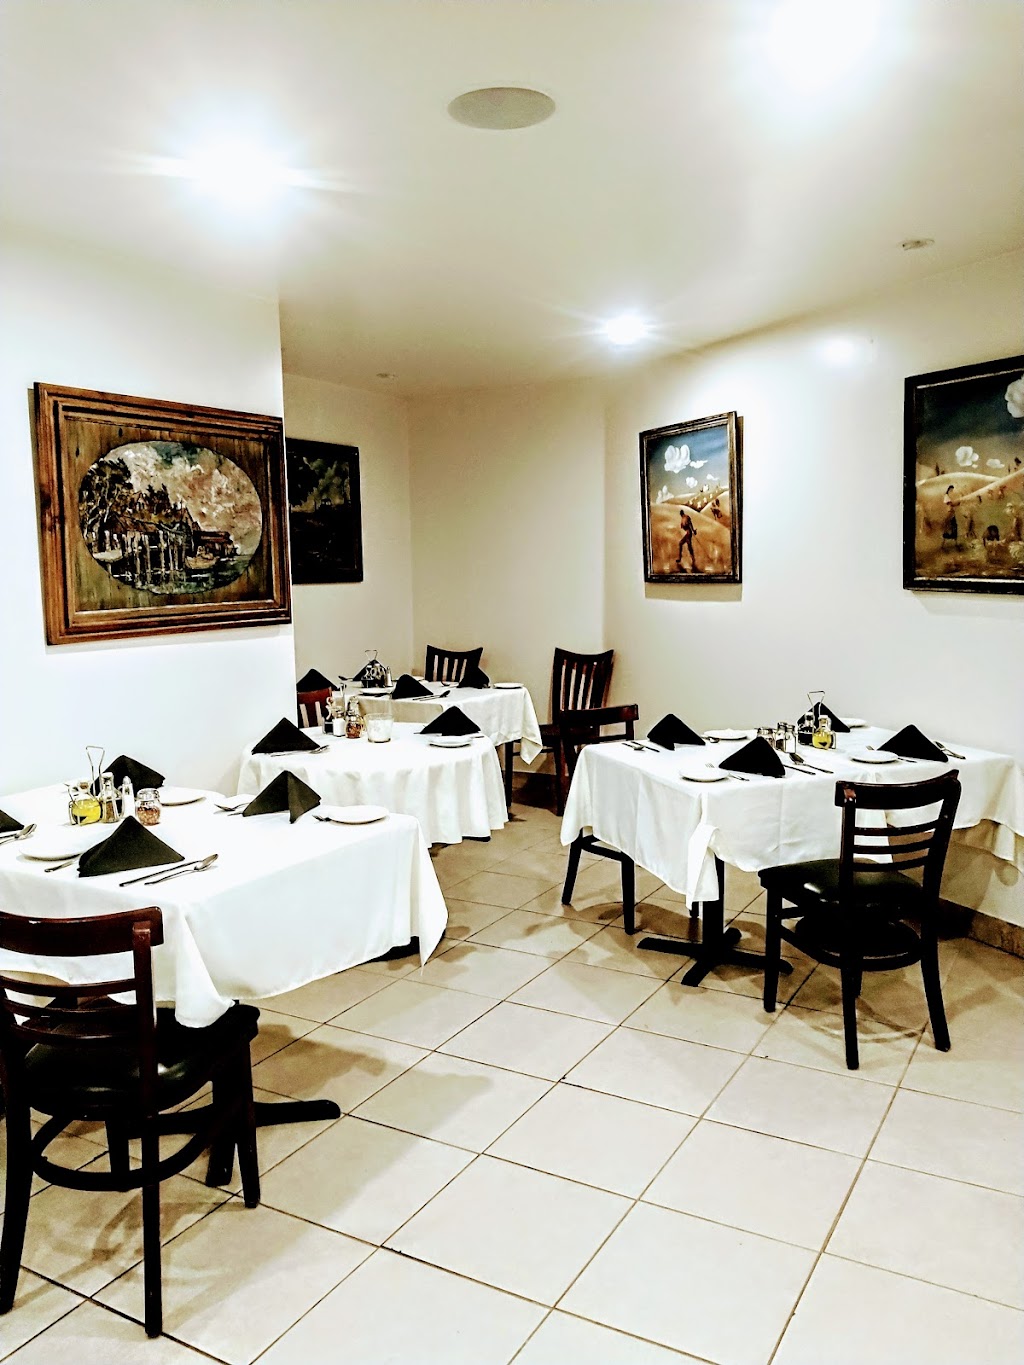 Palermo Italian Restaurant | 791 Auzerais Ave, San Jose, CA 95126 | Phone: (408) 295-6459